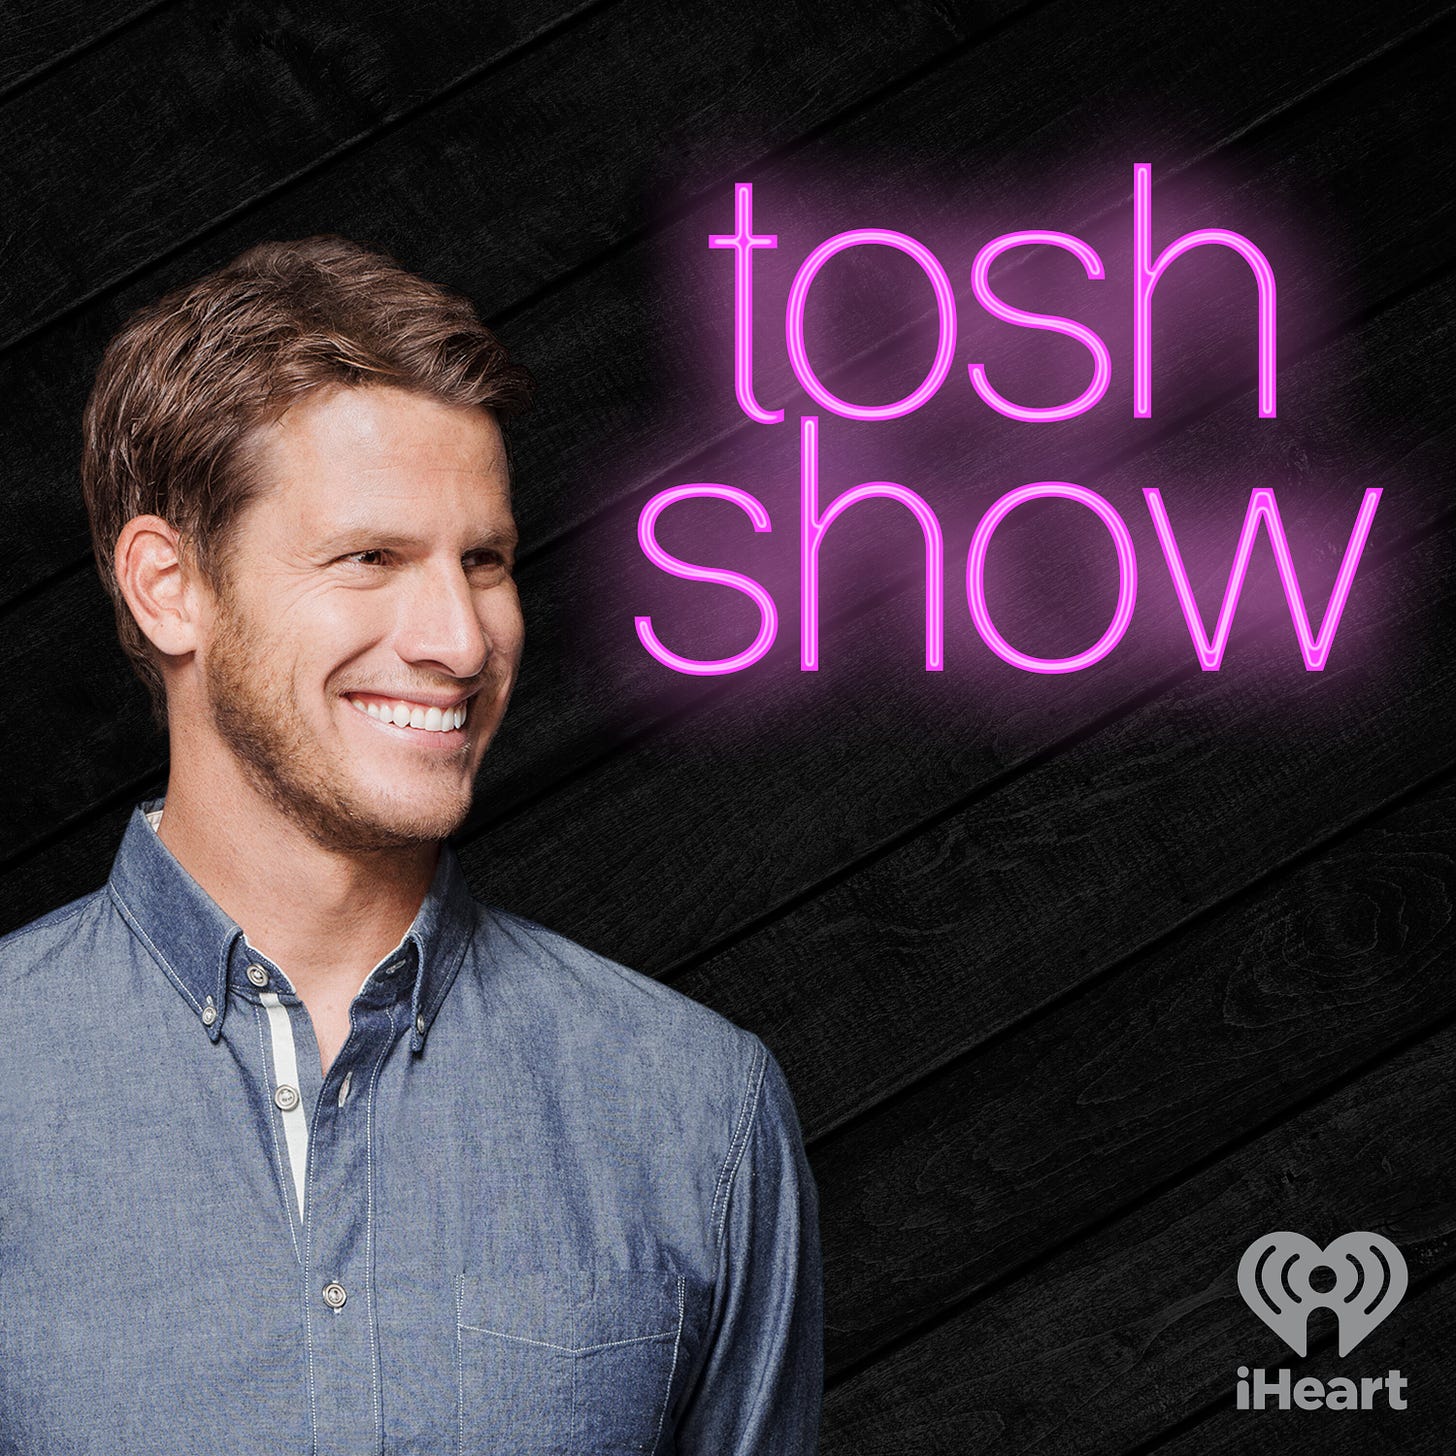 Tosh Show podcast show image